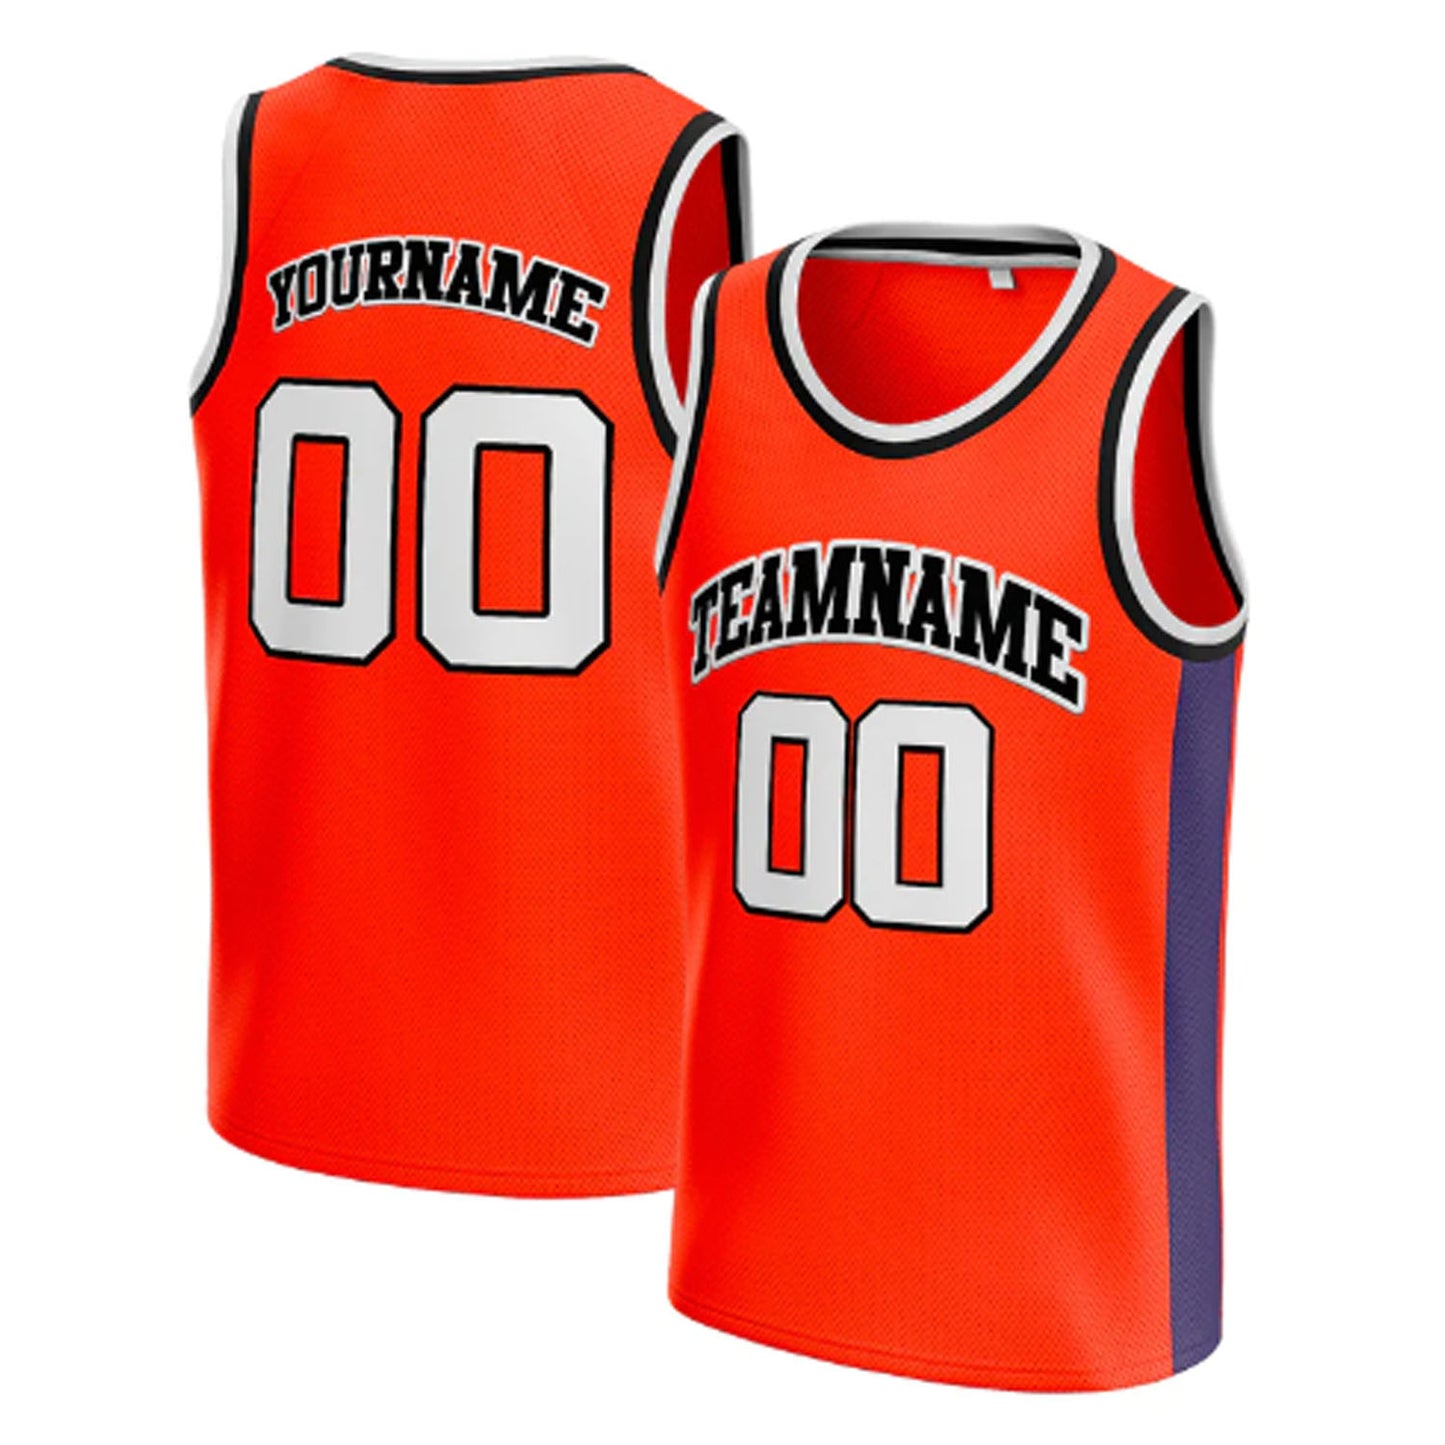 Orange White-Black Custom Basketball Jersey